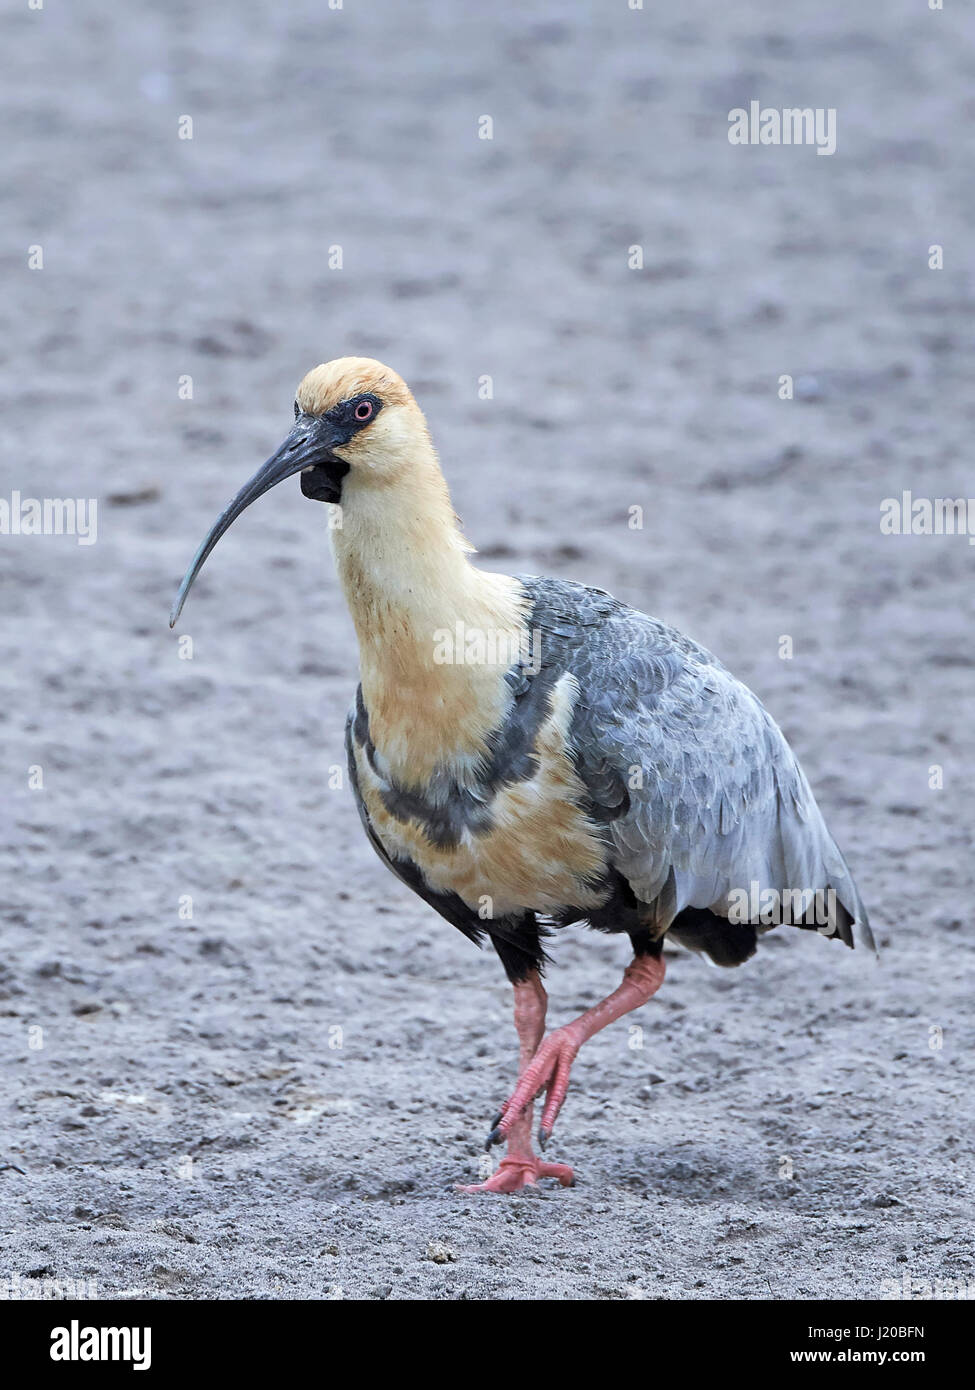 Black-faced ibis walking in sand in its habitat Stock Photo